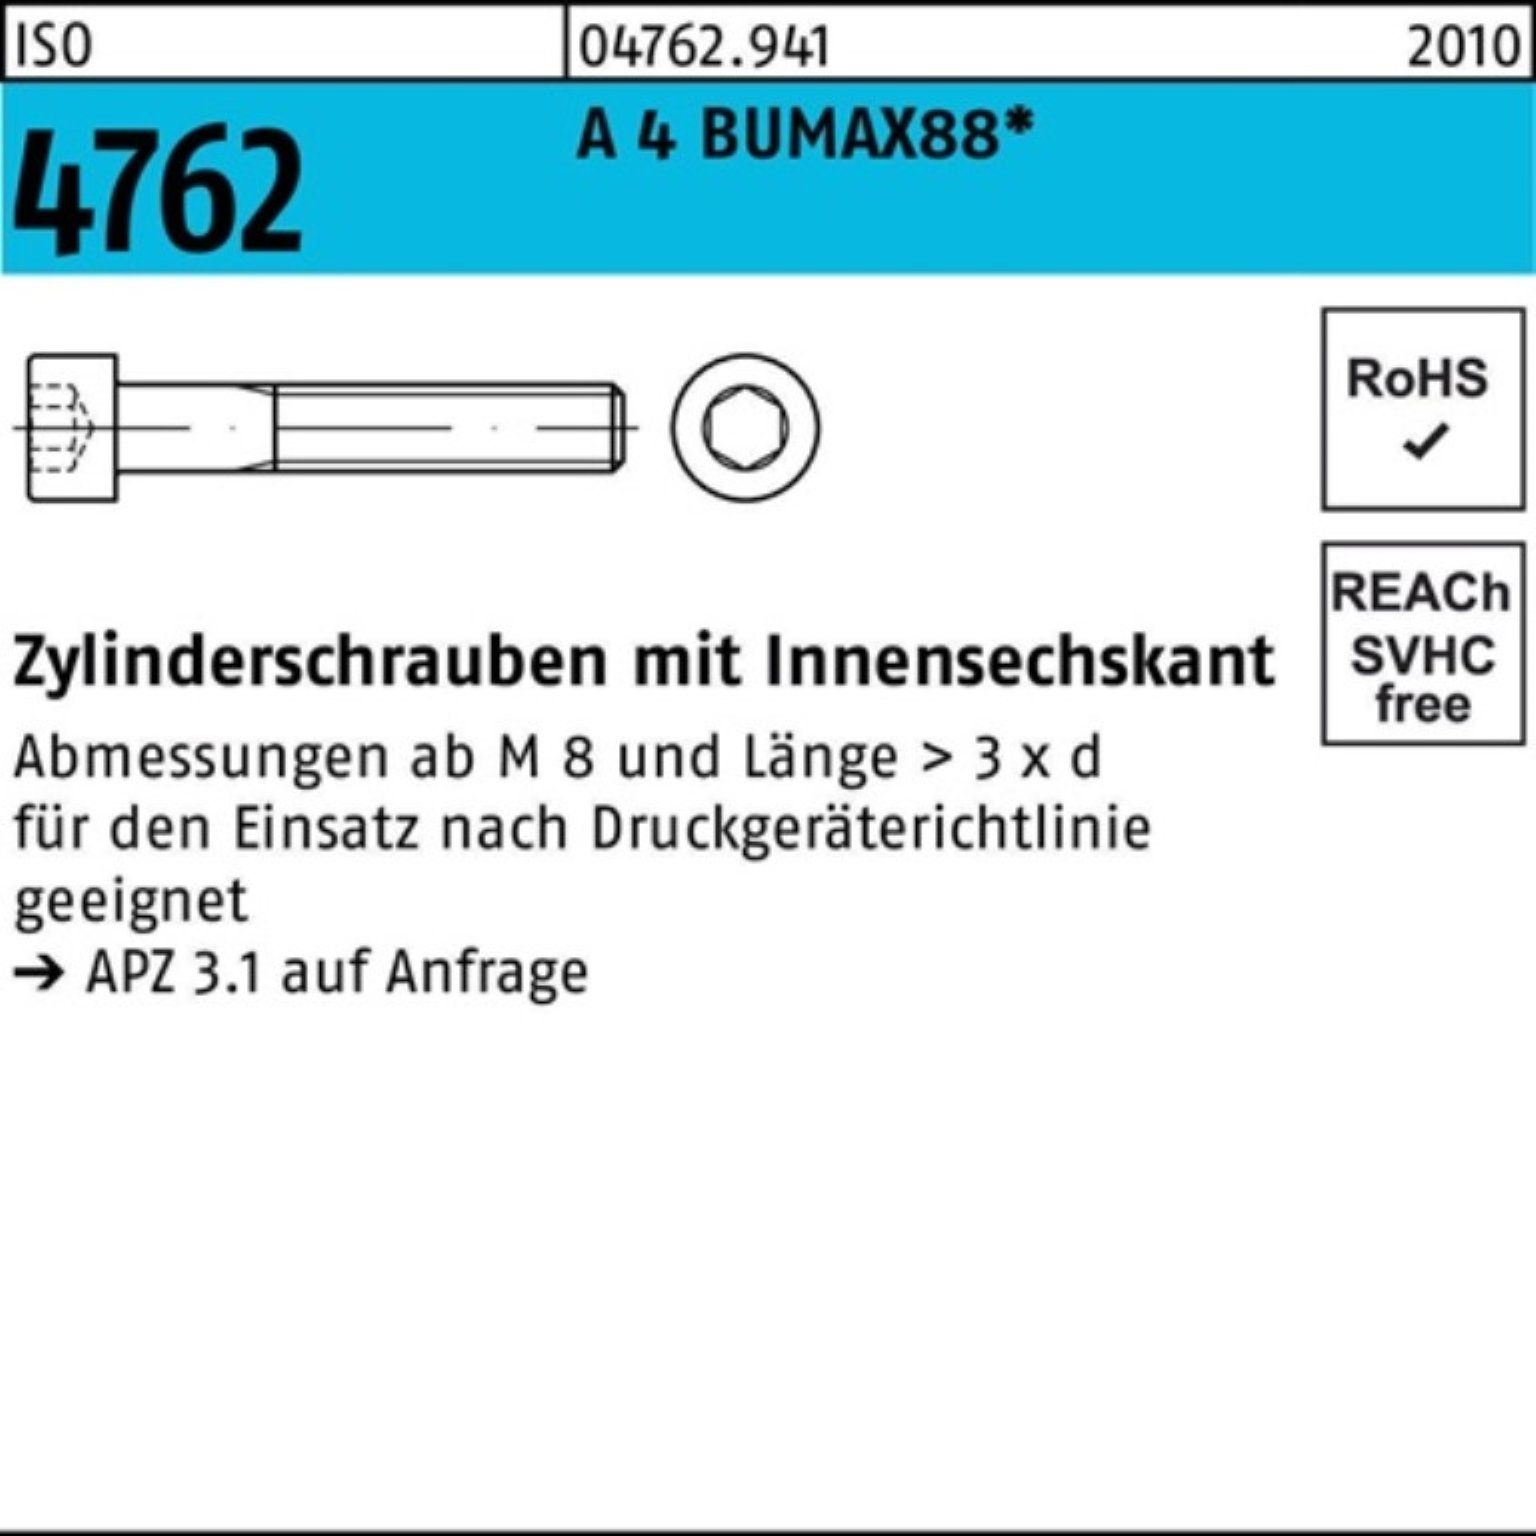 A 4 Zylinderschraube ISO Bufab 30 4762 BUMAX88 Innen-6kt Zylinderschraube 100er 50 M10x Pack